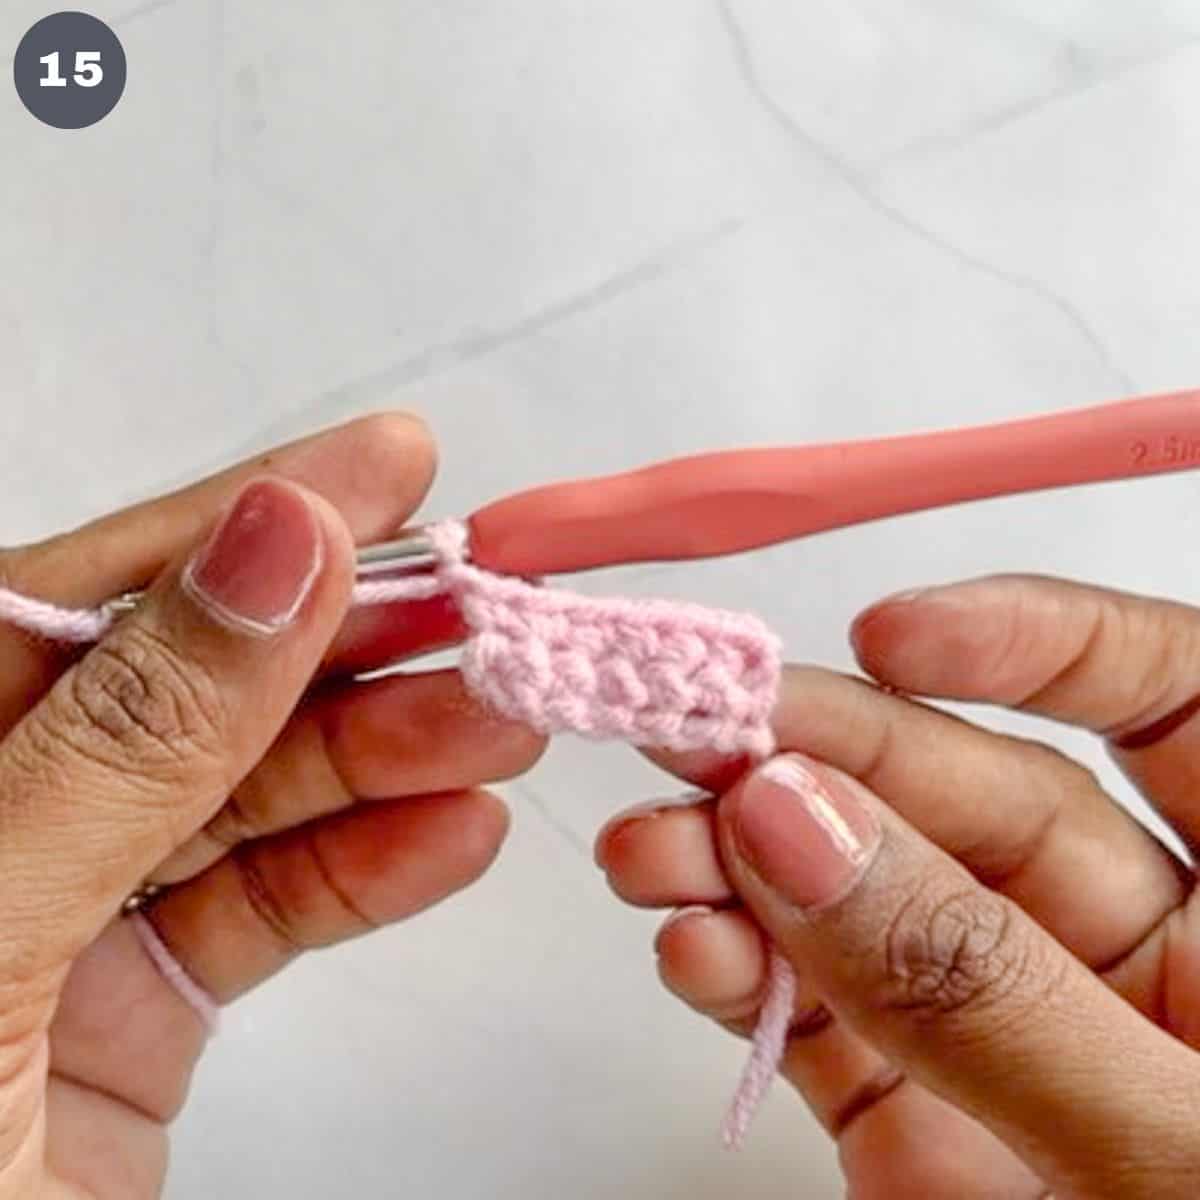 A rectangle crochet piece in pink yarn.